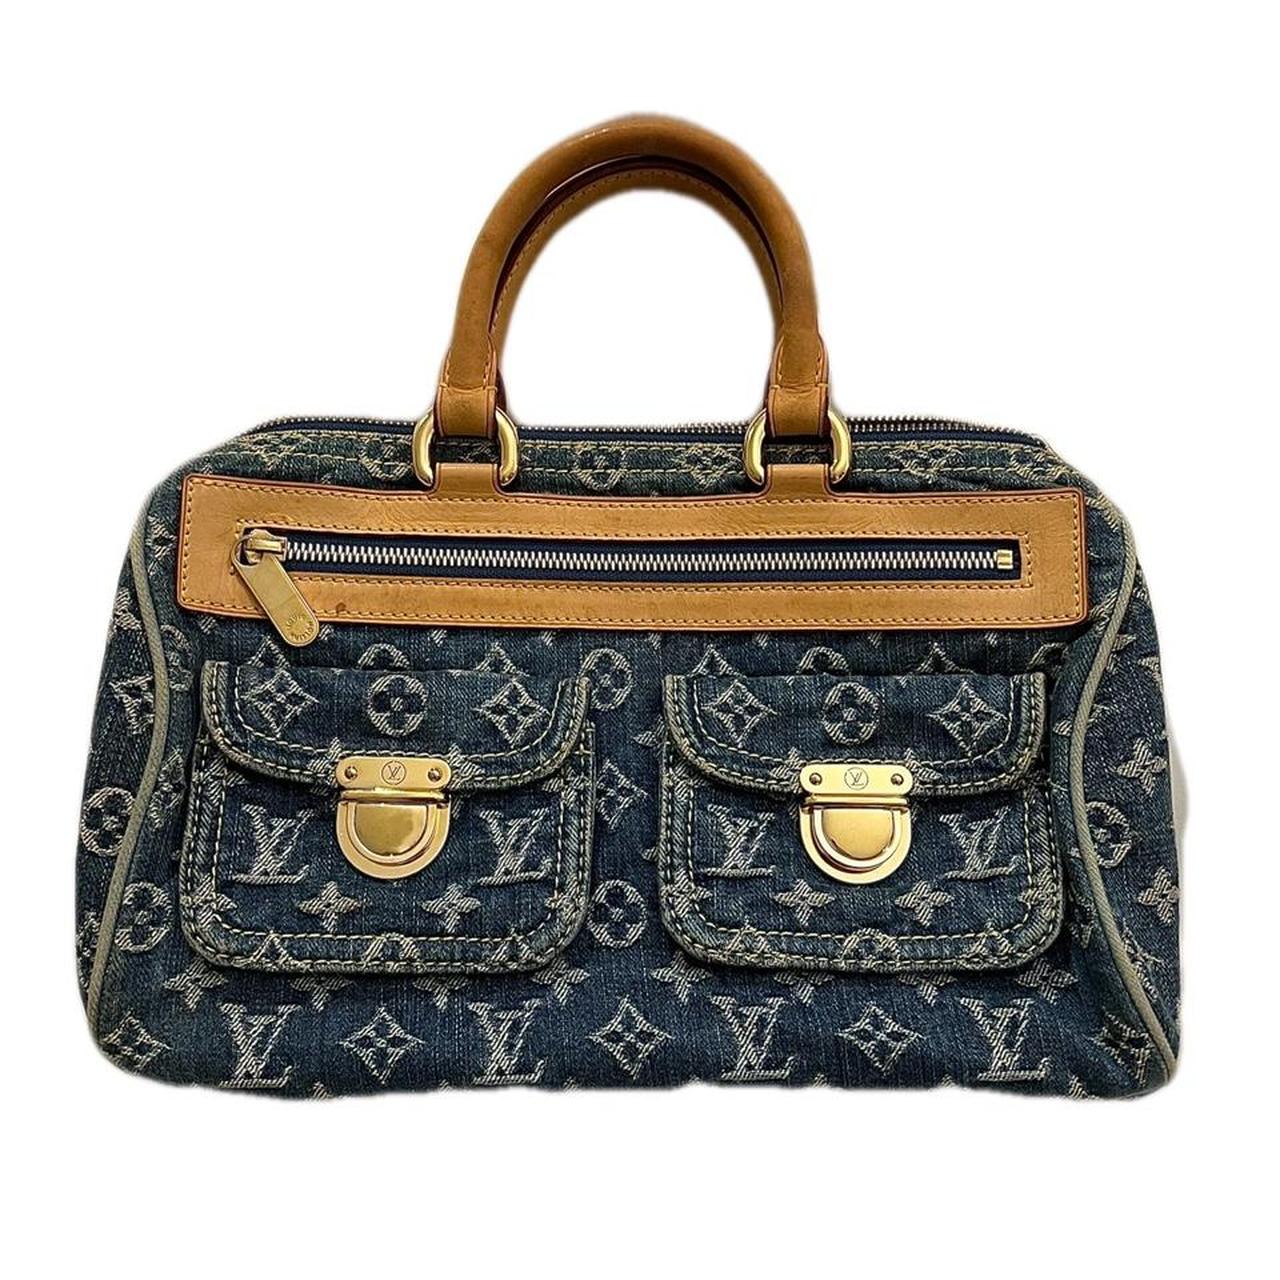 Louis Vuitton denim bag - Depop